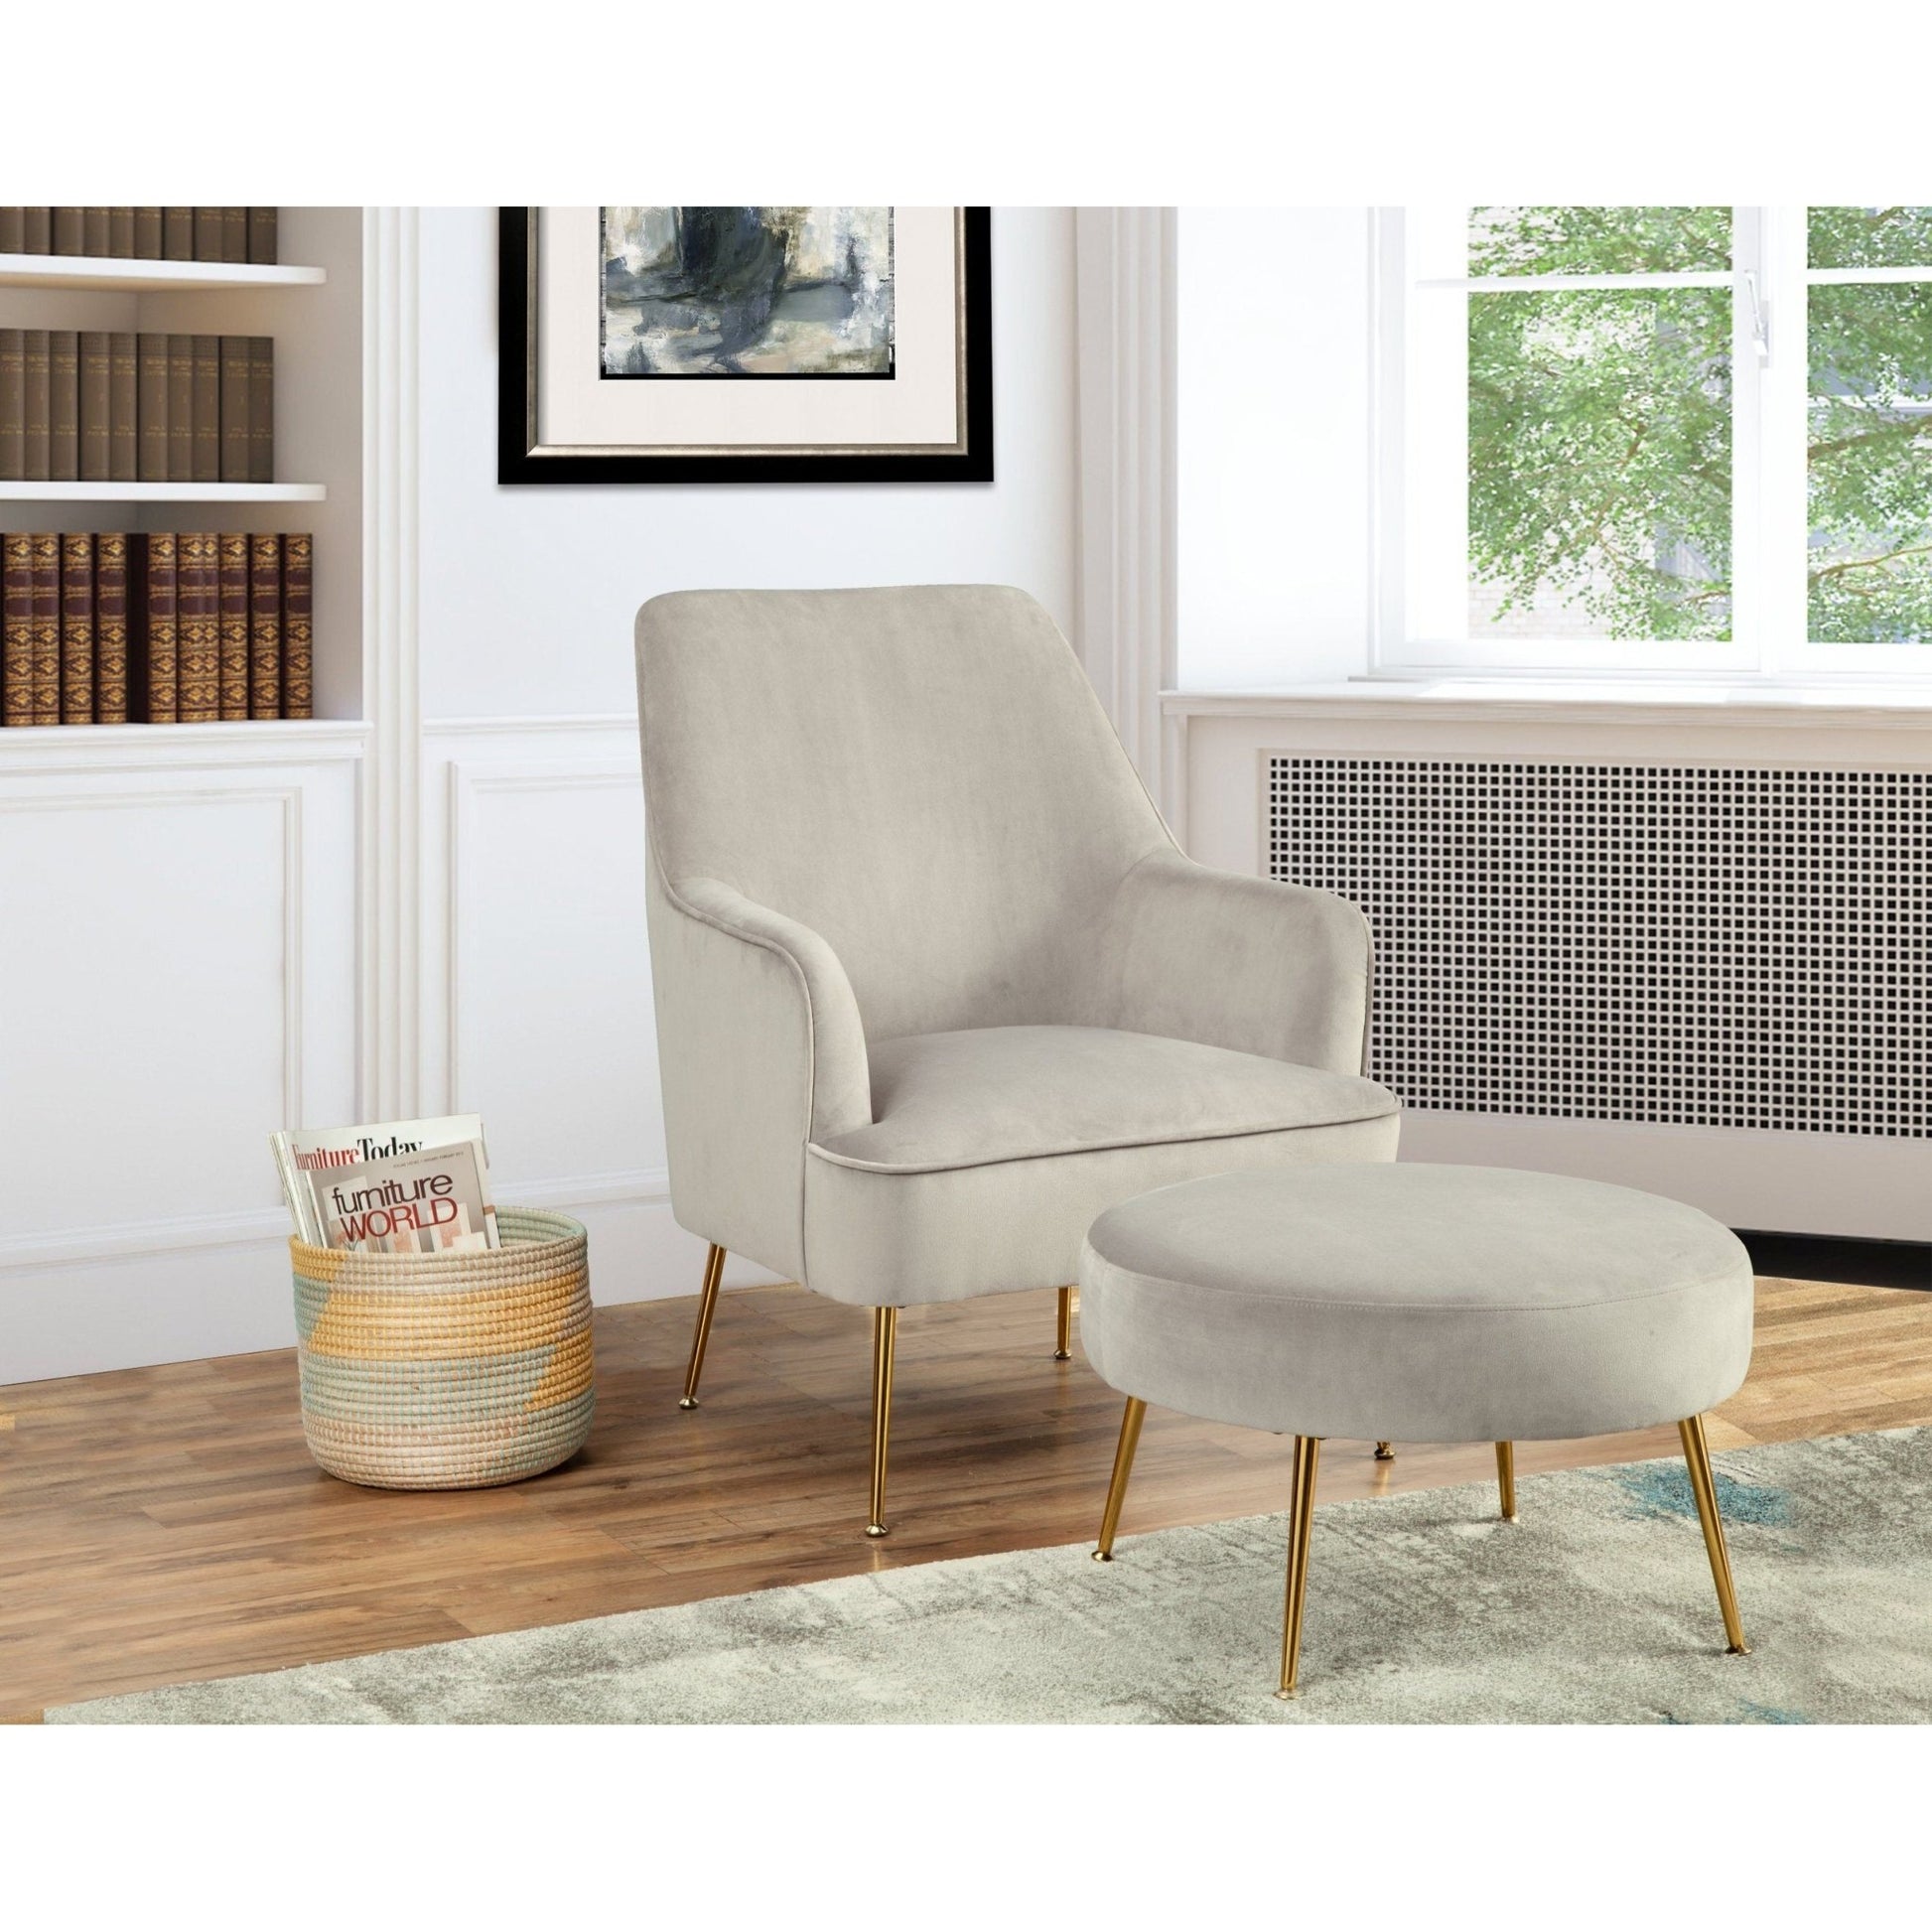 Rebecca Leisure Chair, Grey - Alpine Furniture